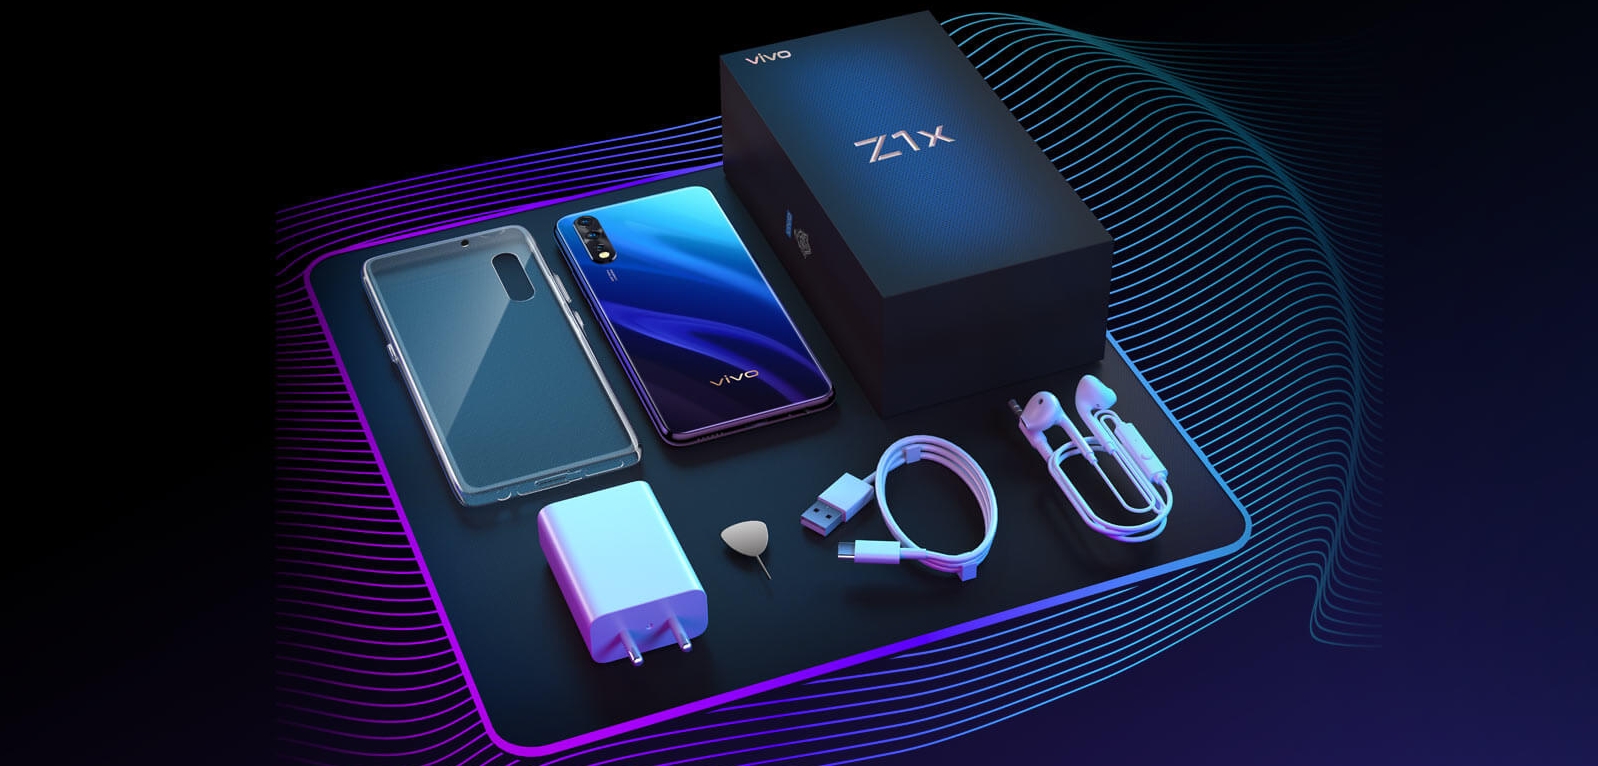 Vivo Z1x smarttelefon - fordeler og ulemper